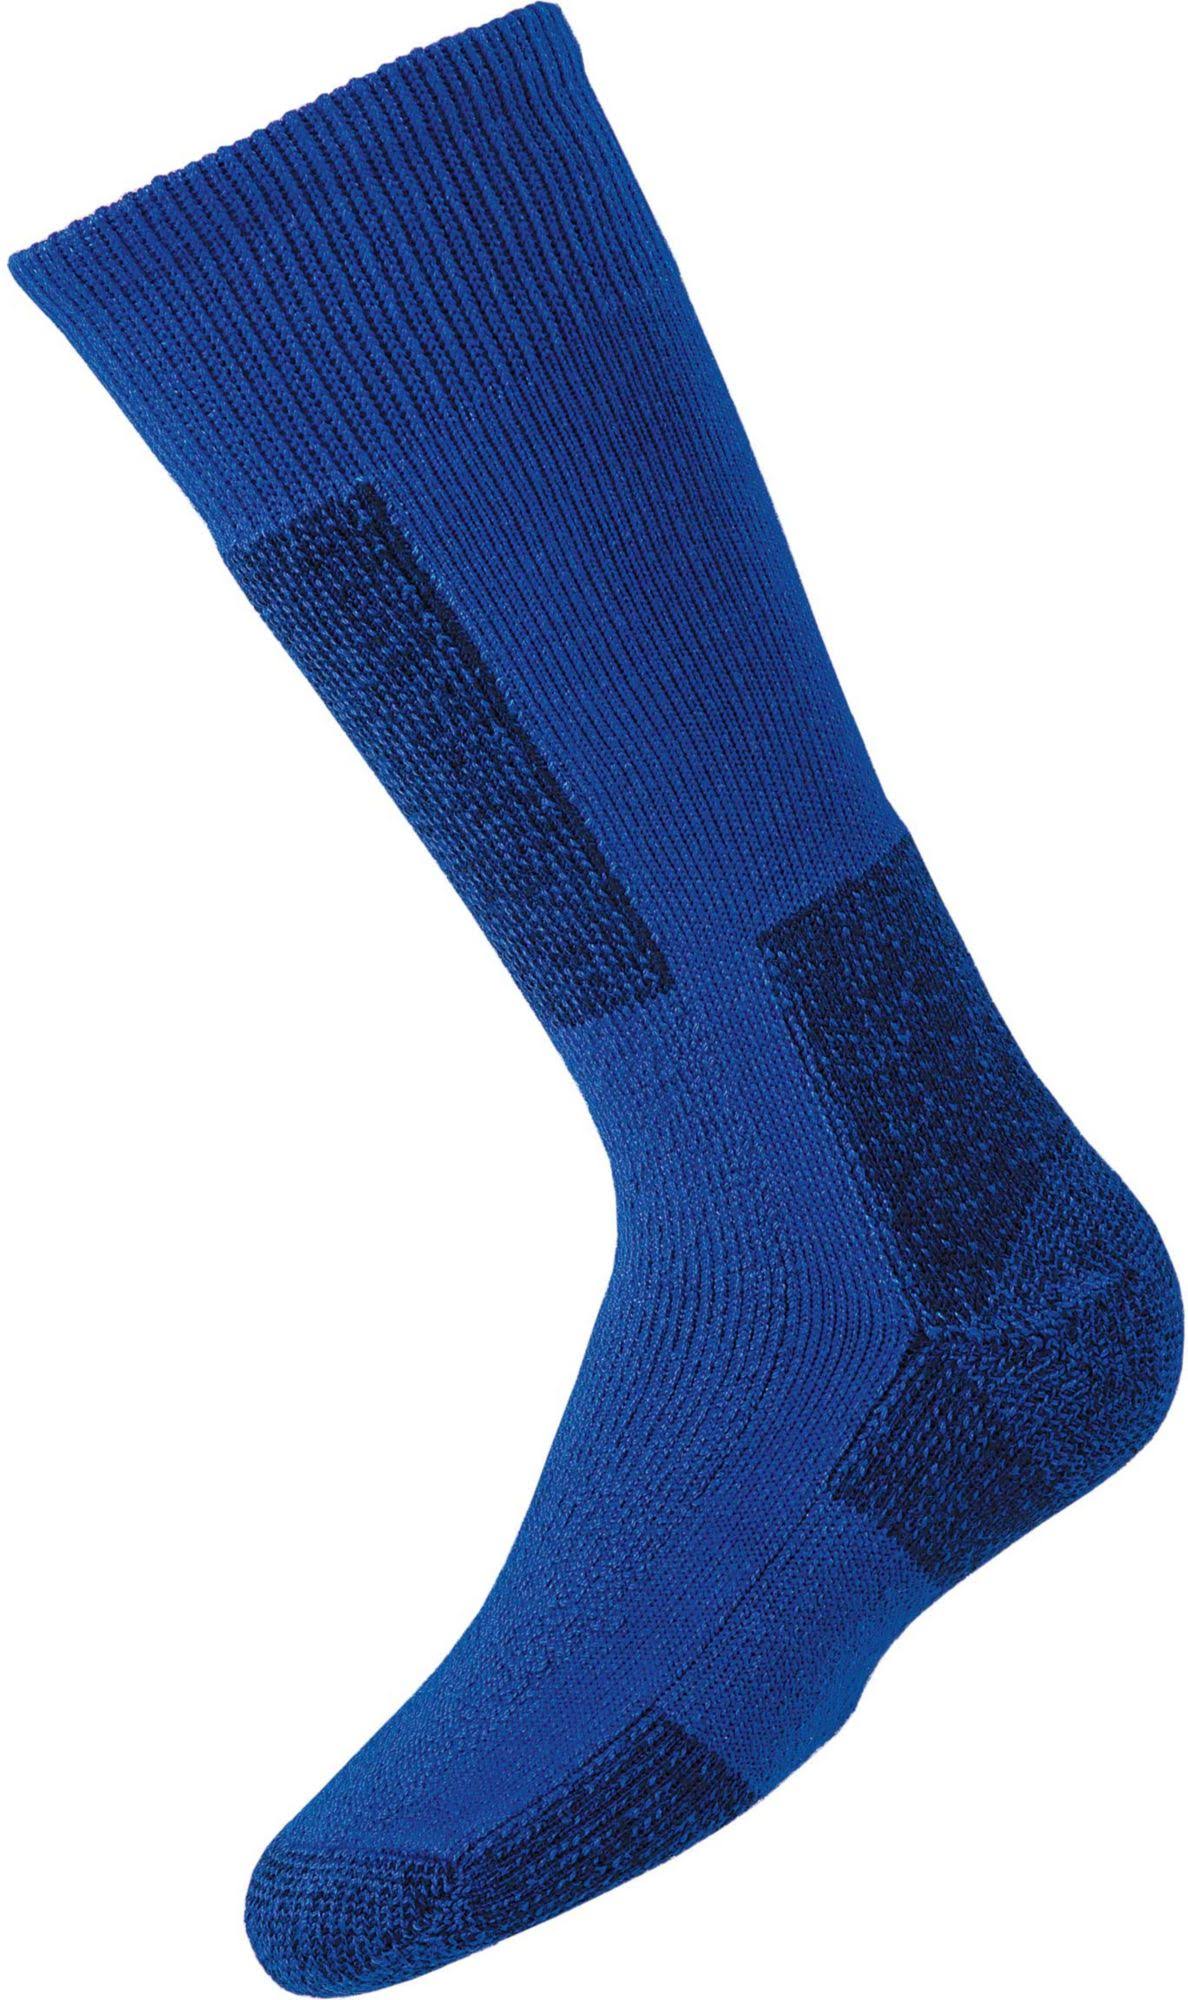 Thorlo Junior Snow Socks - Blue, 3.5-5